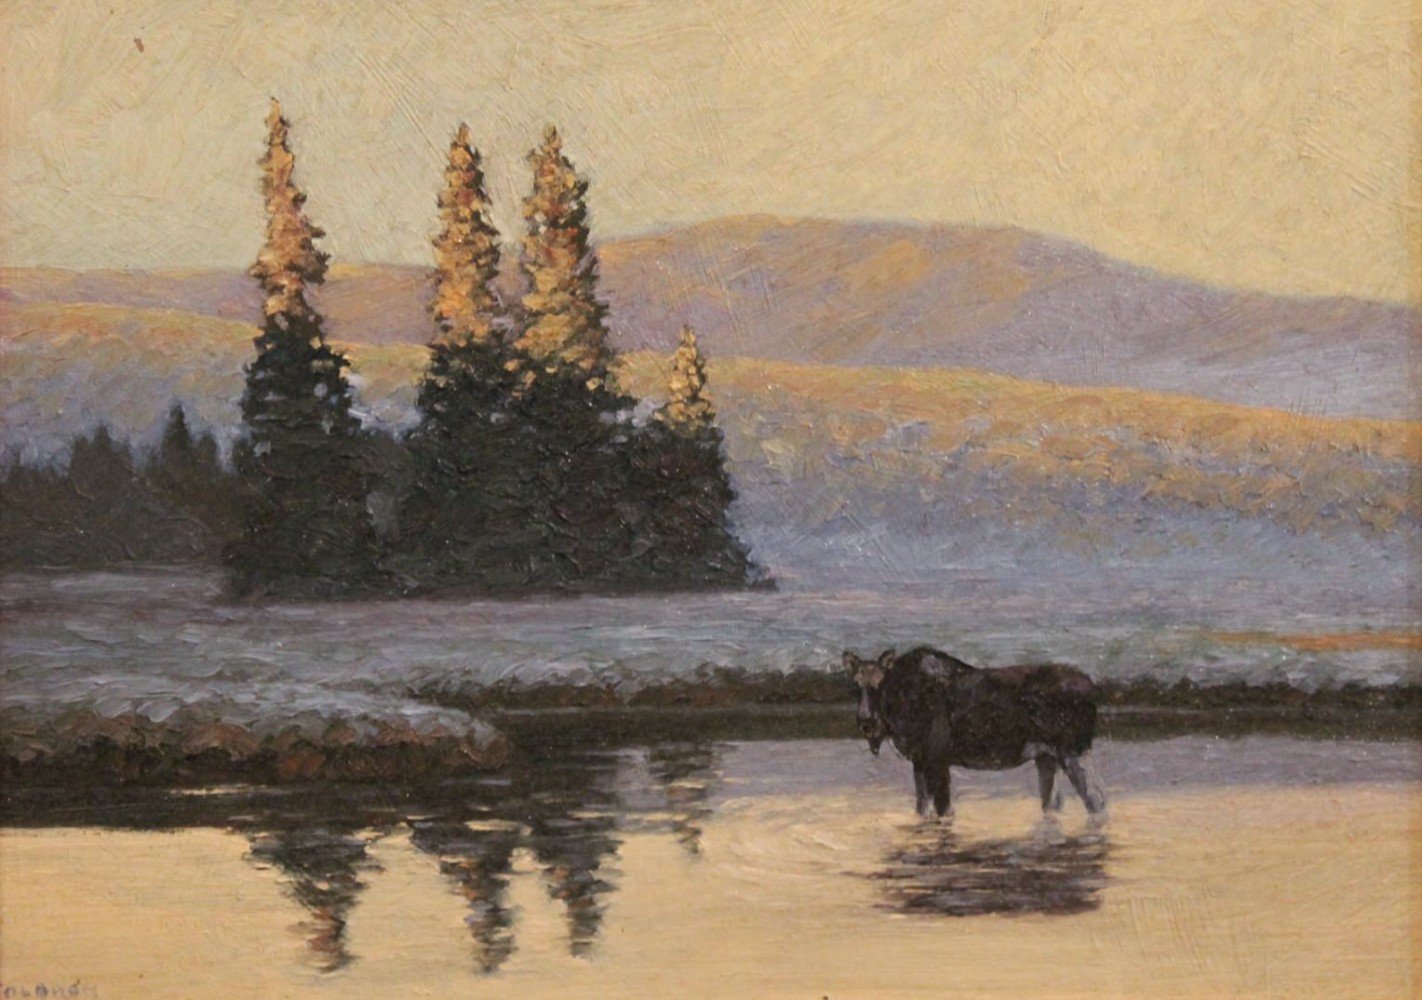 Female Moose in River by Paul Colbrun